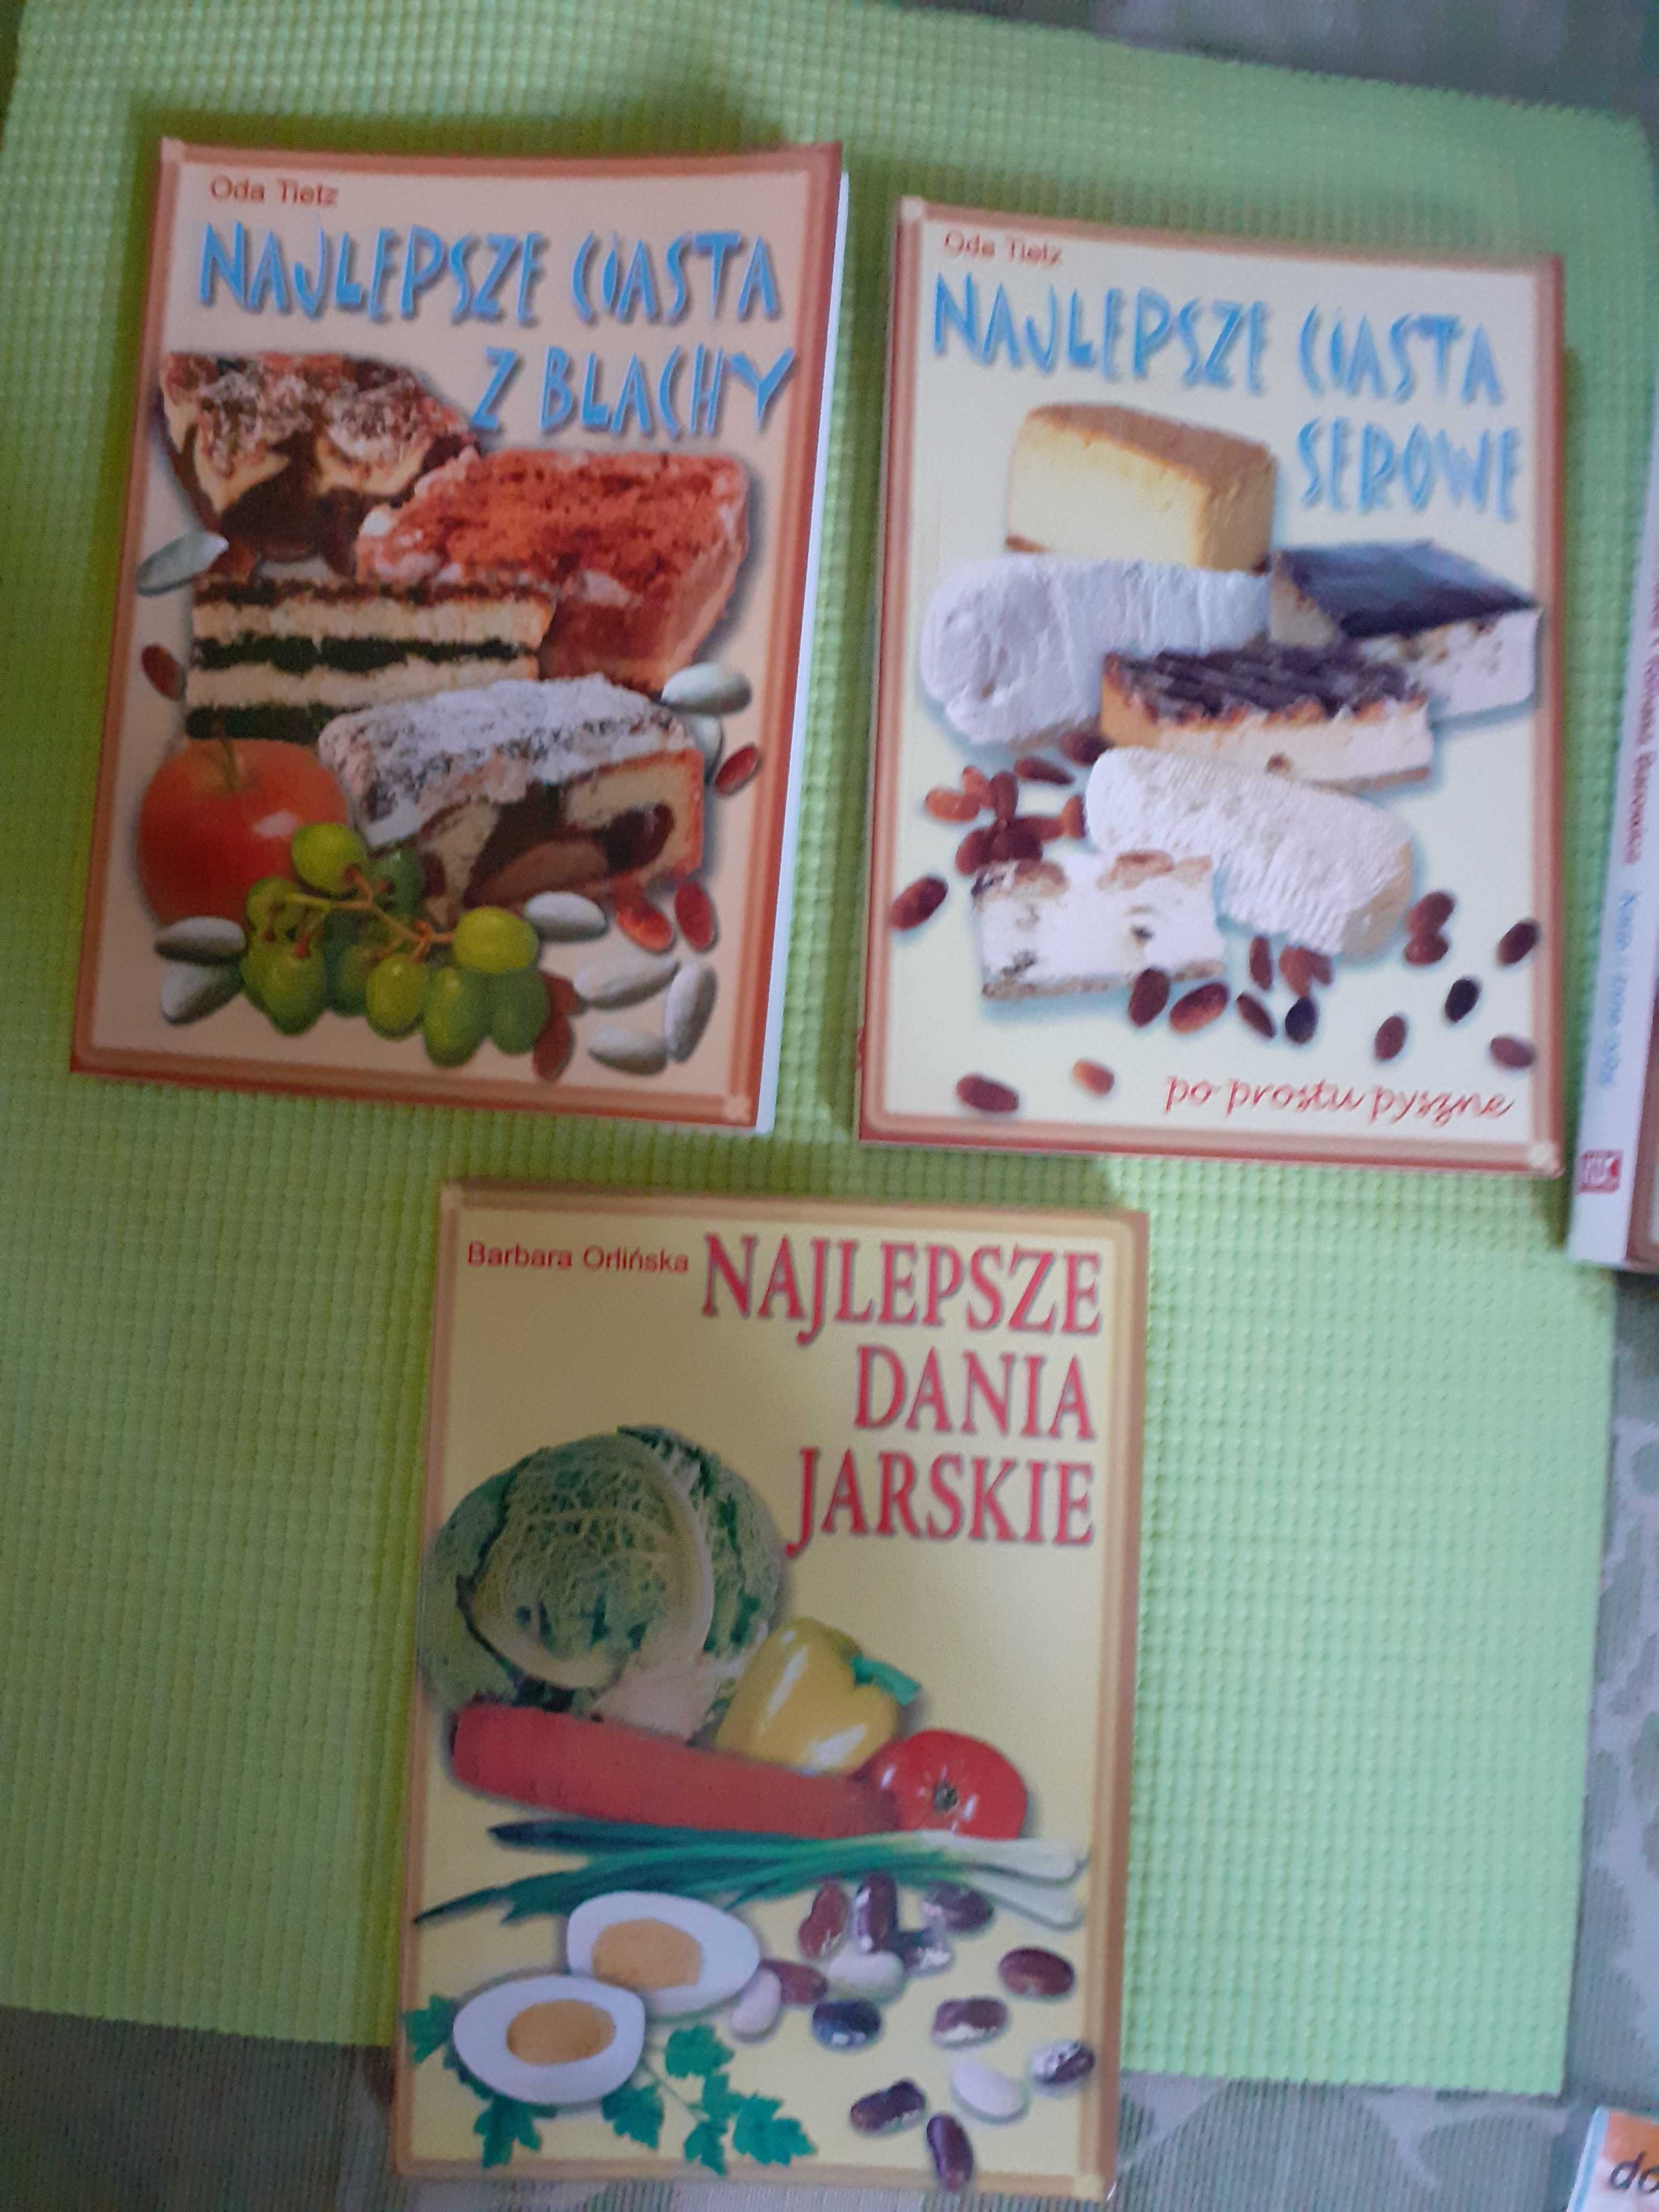 7 książek Barowicz, Caprari, Orlińska, Tietz - książki kulinarne